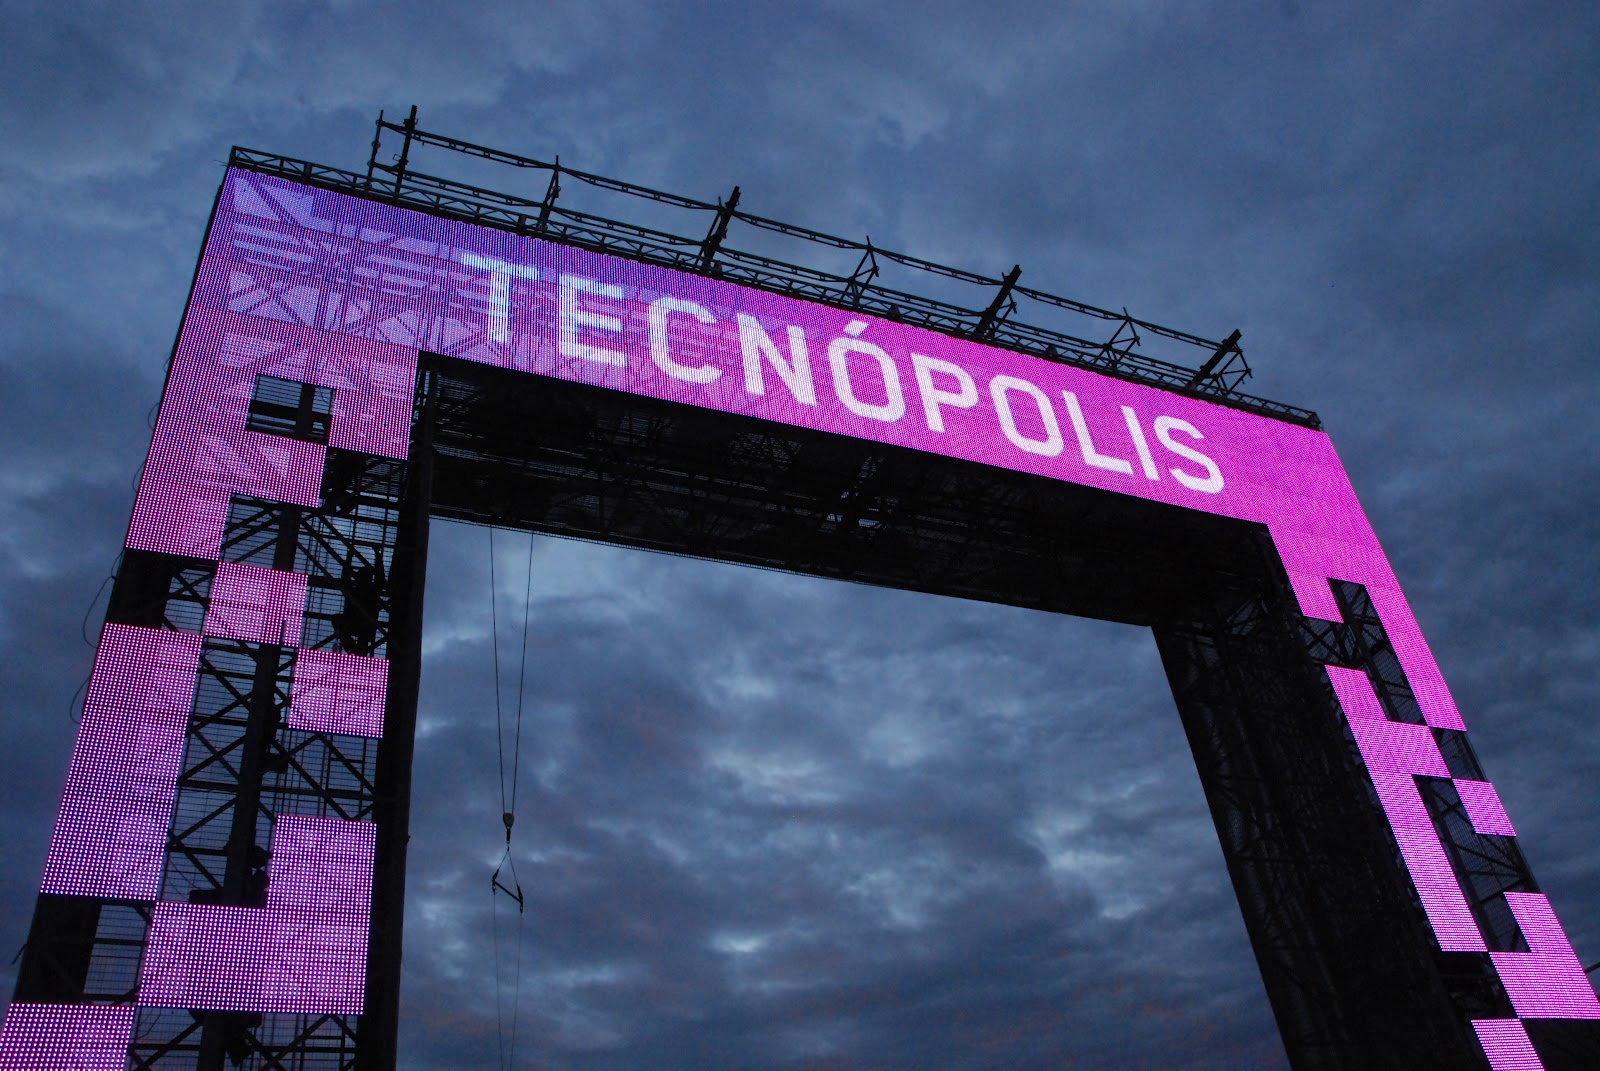 Tecnopolis Logo photo - 1